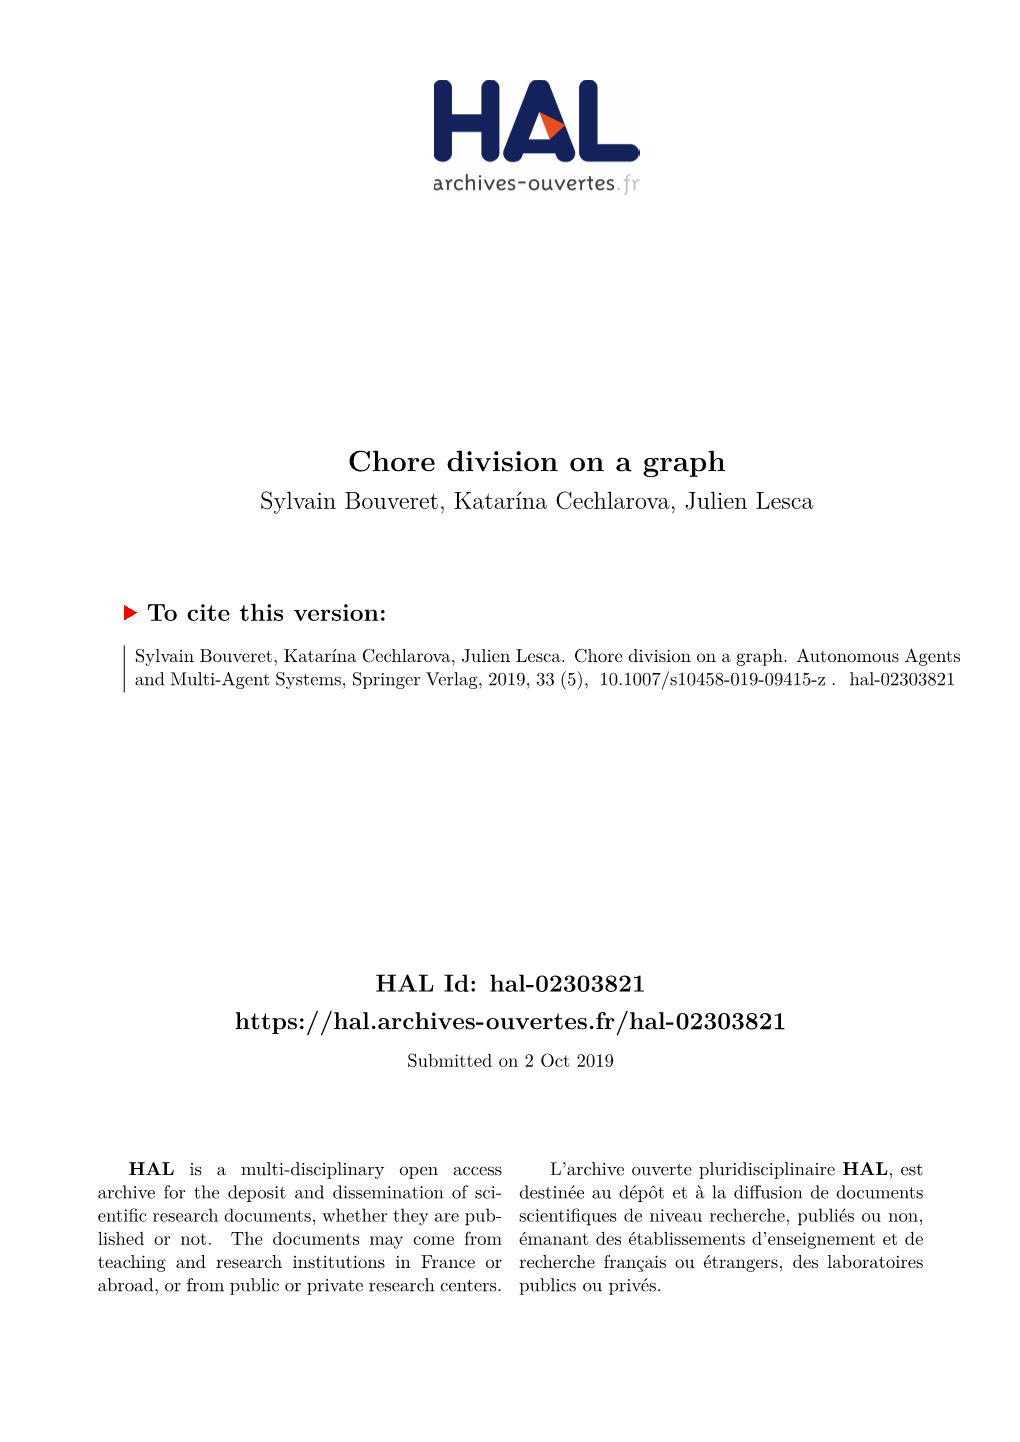 Chore Division on a Graph Sylvain Bouveret, Katarína Cechlarova, Julien Lesca